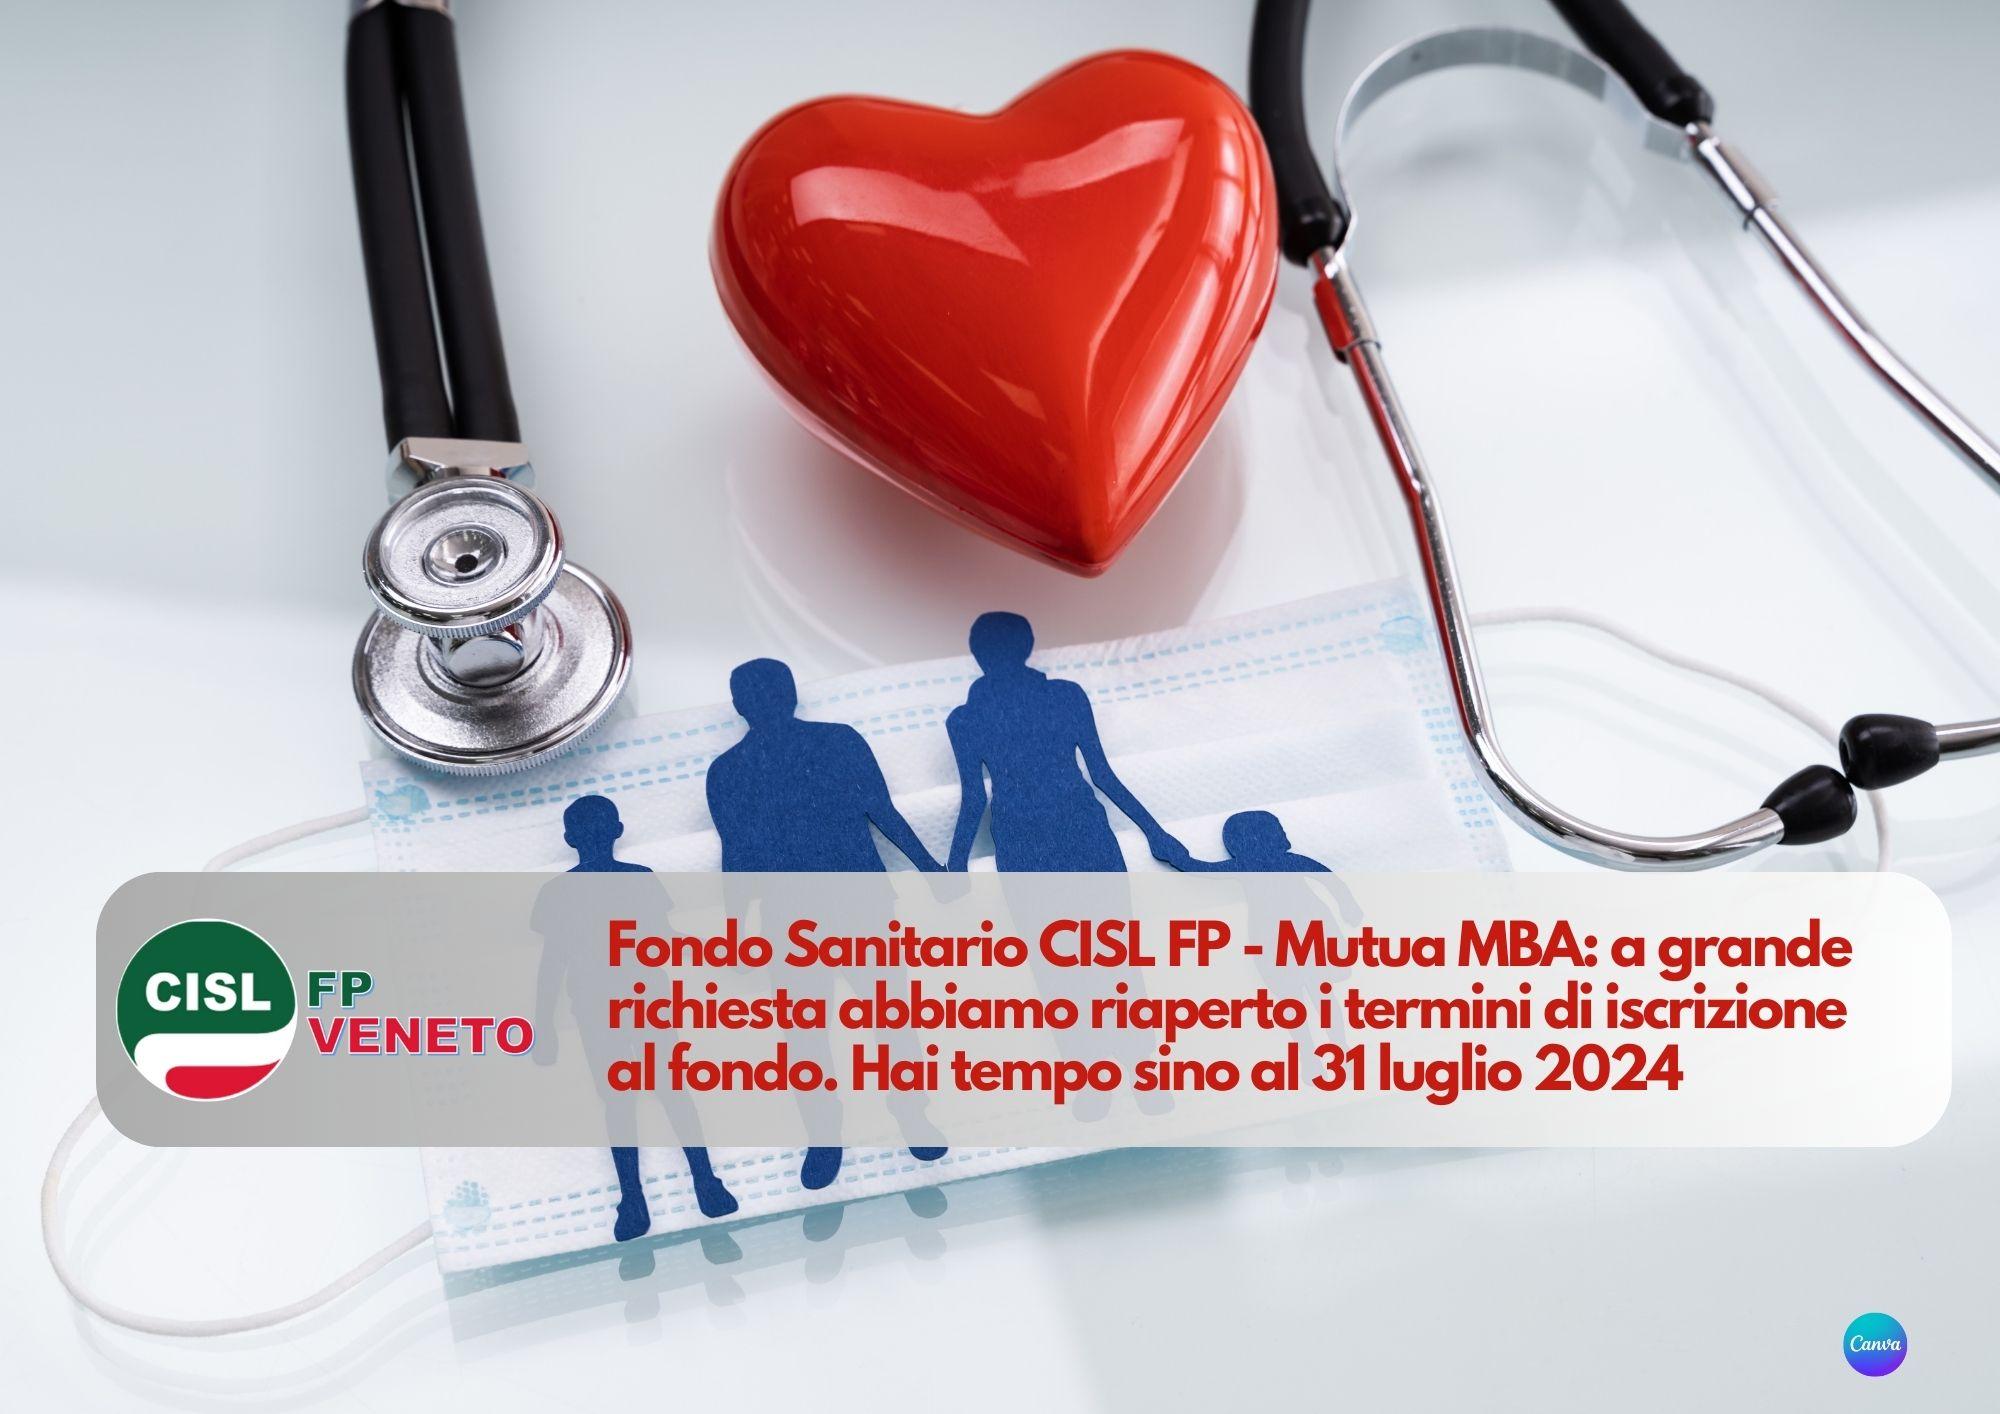 CISL FP Veneto. Fondo Sanitario CISL FP - Mutua MBA: apertura adesione straordinaria